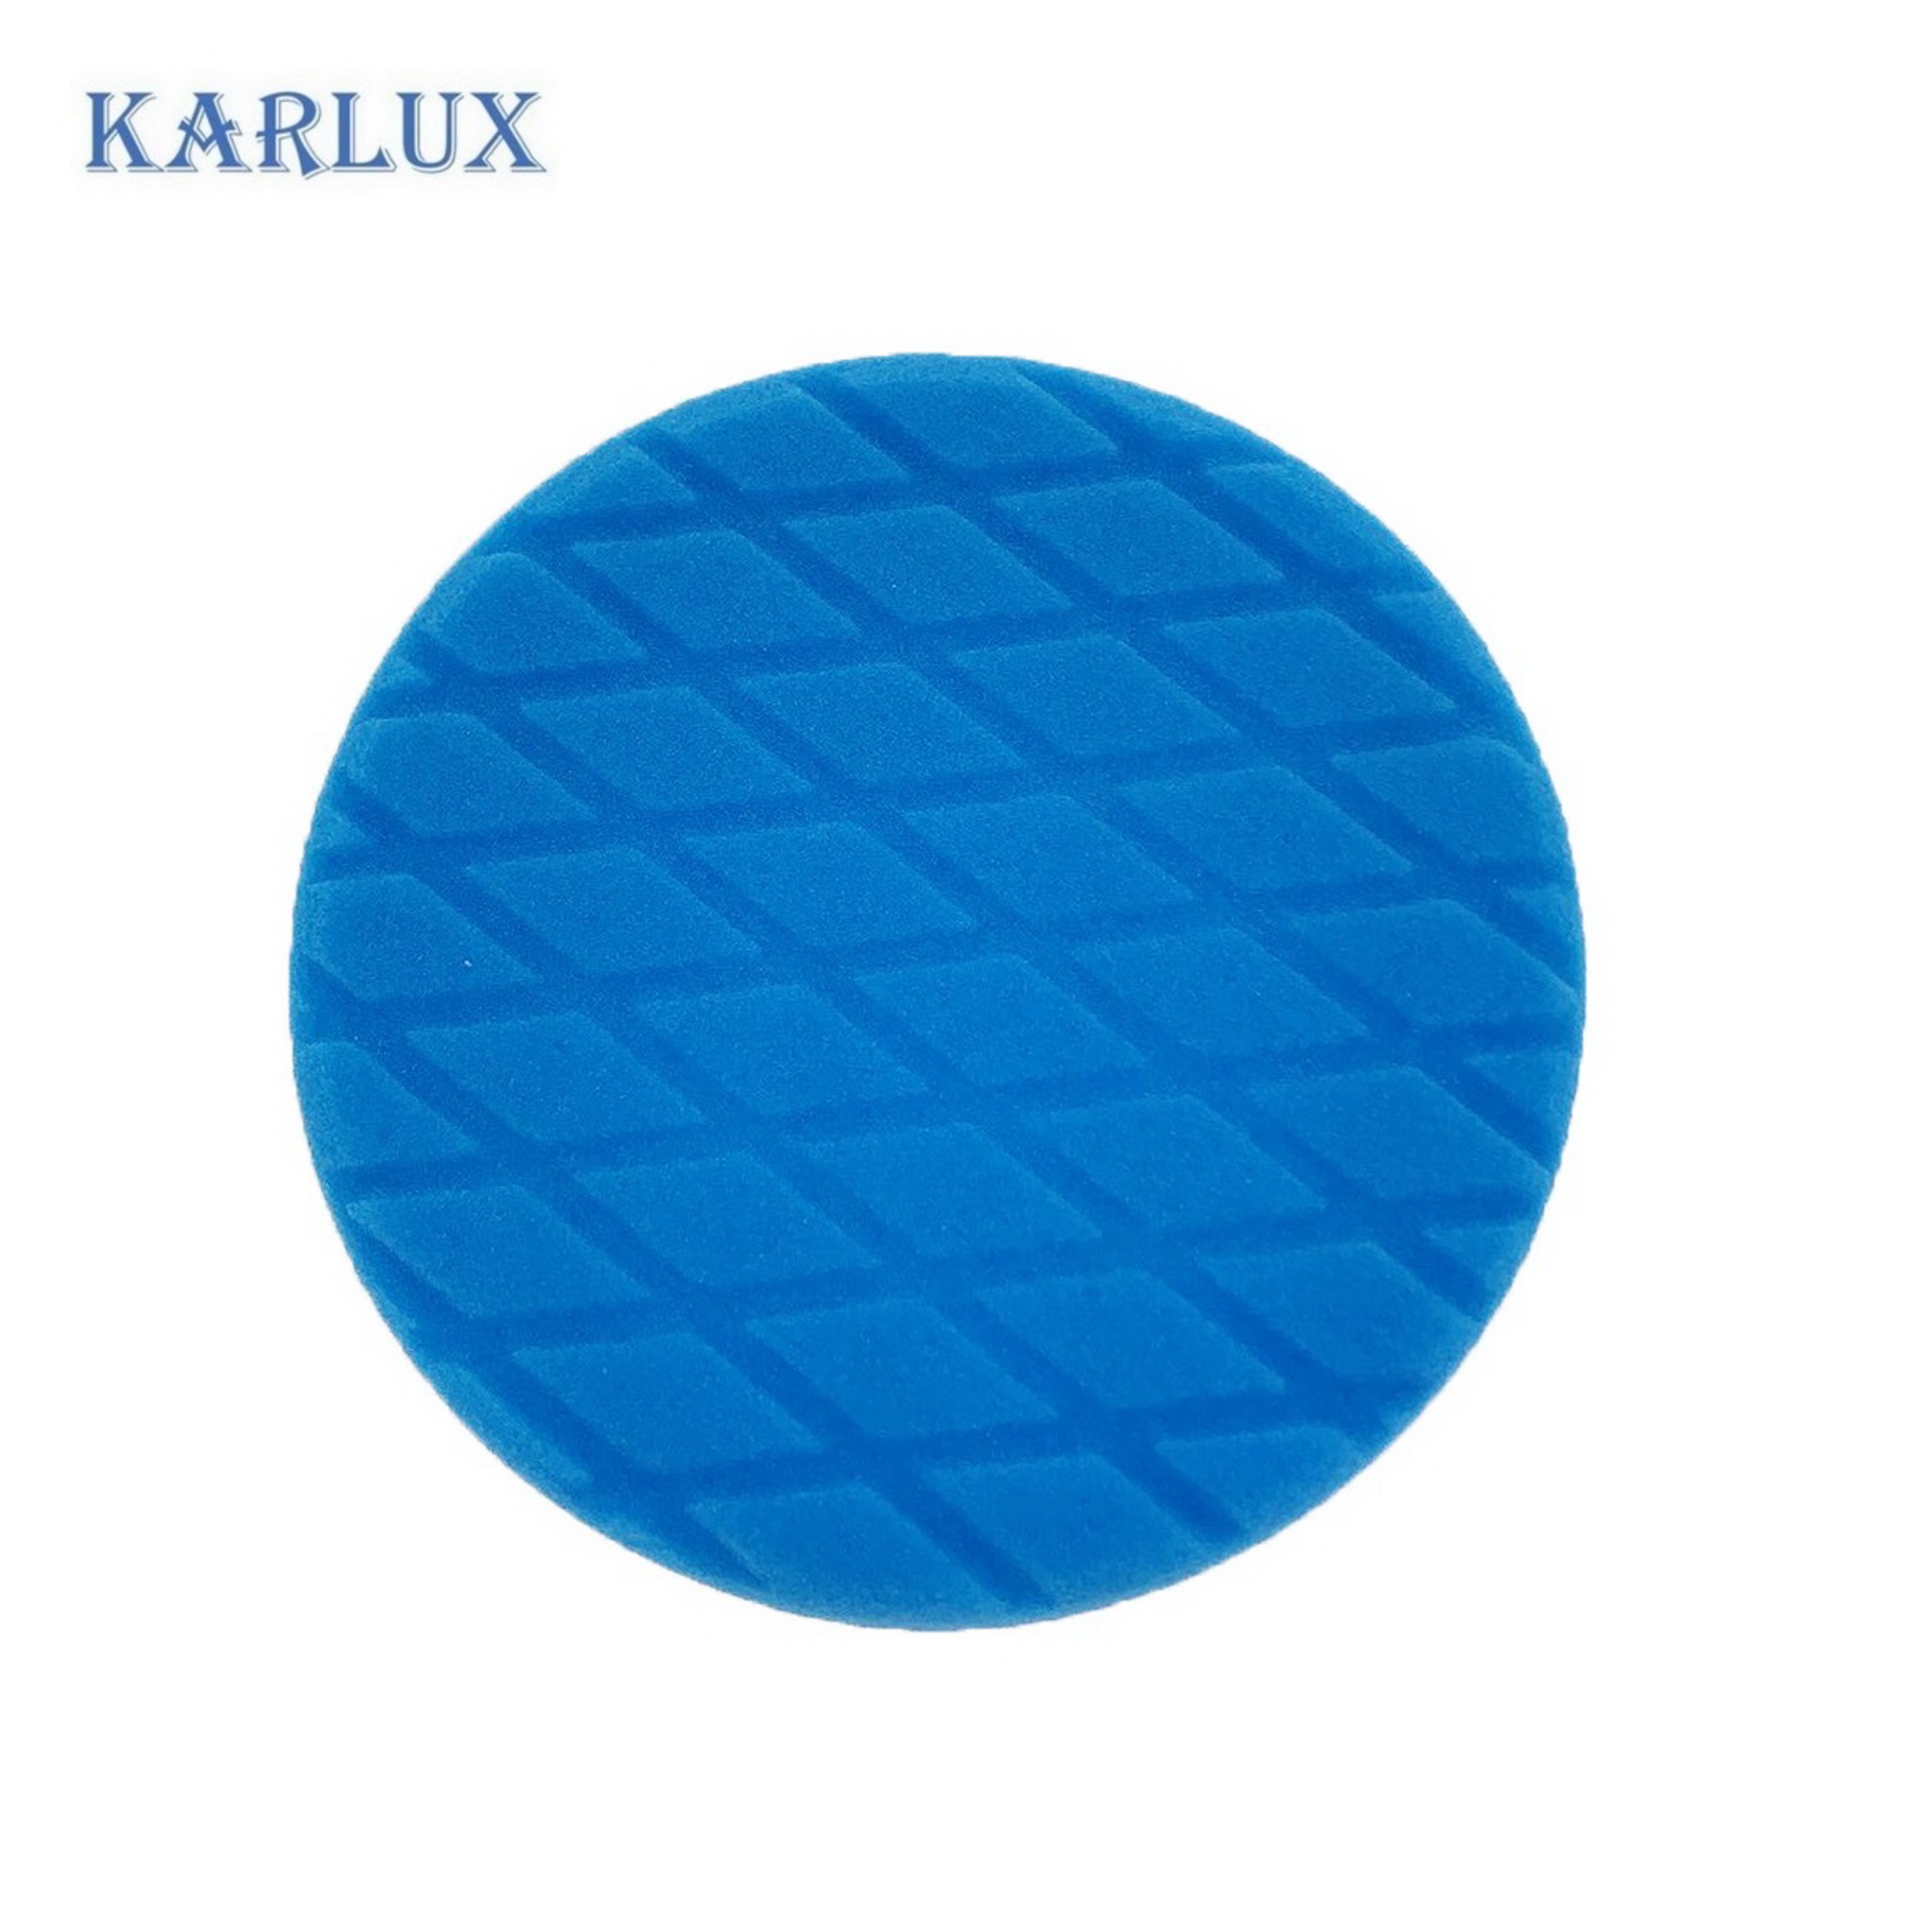 Karlux ฟองน้ำขัดสีรถ 6นิ้ว สีฟ้า Blue Fine Finishing Diamond Cross Foam 6inch (สำหรับแป้นจับ 5นิ้ว เพื่อเว้นขอบ)